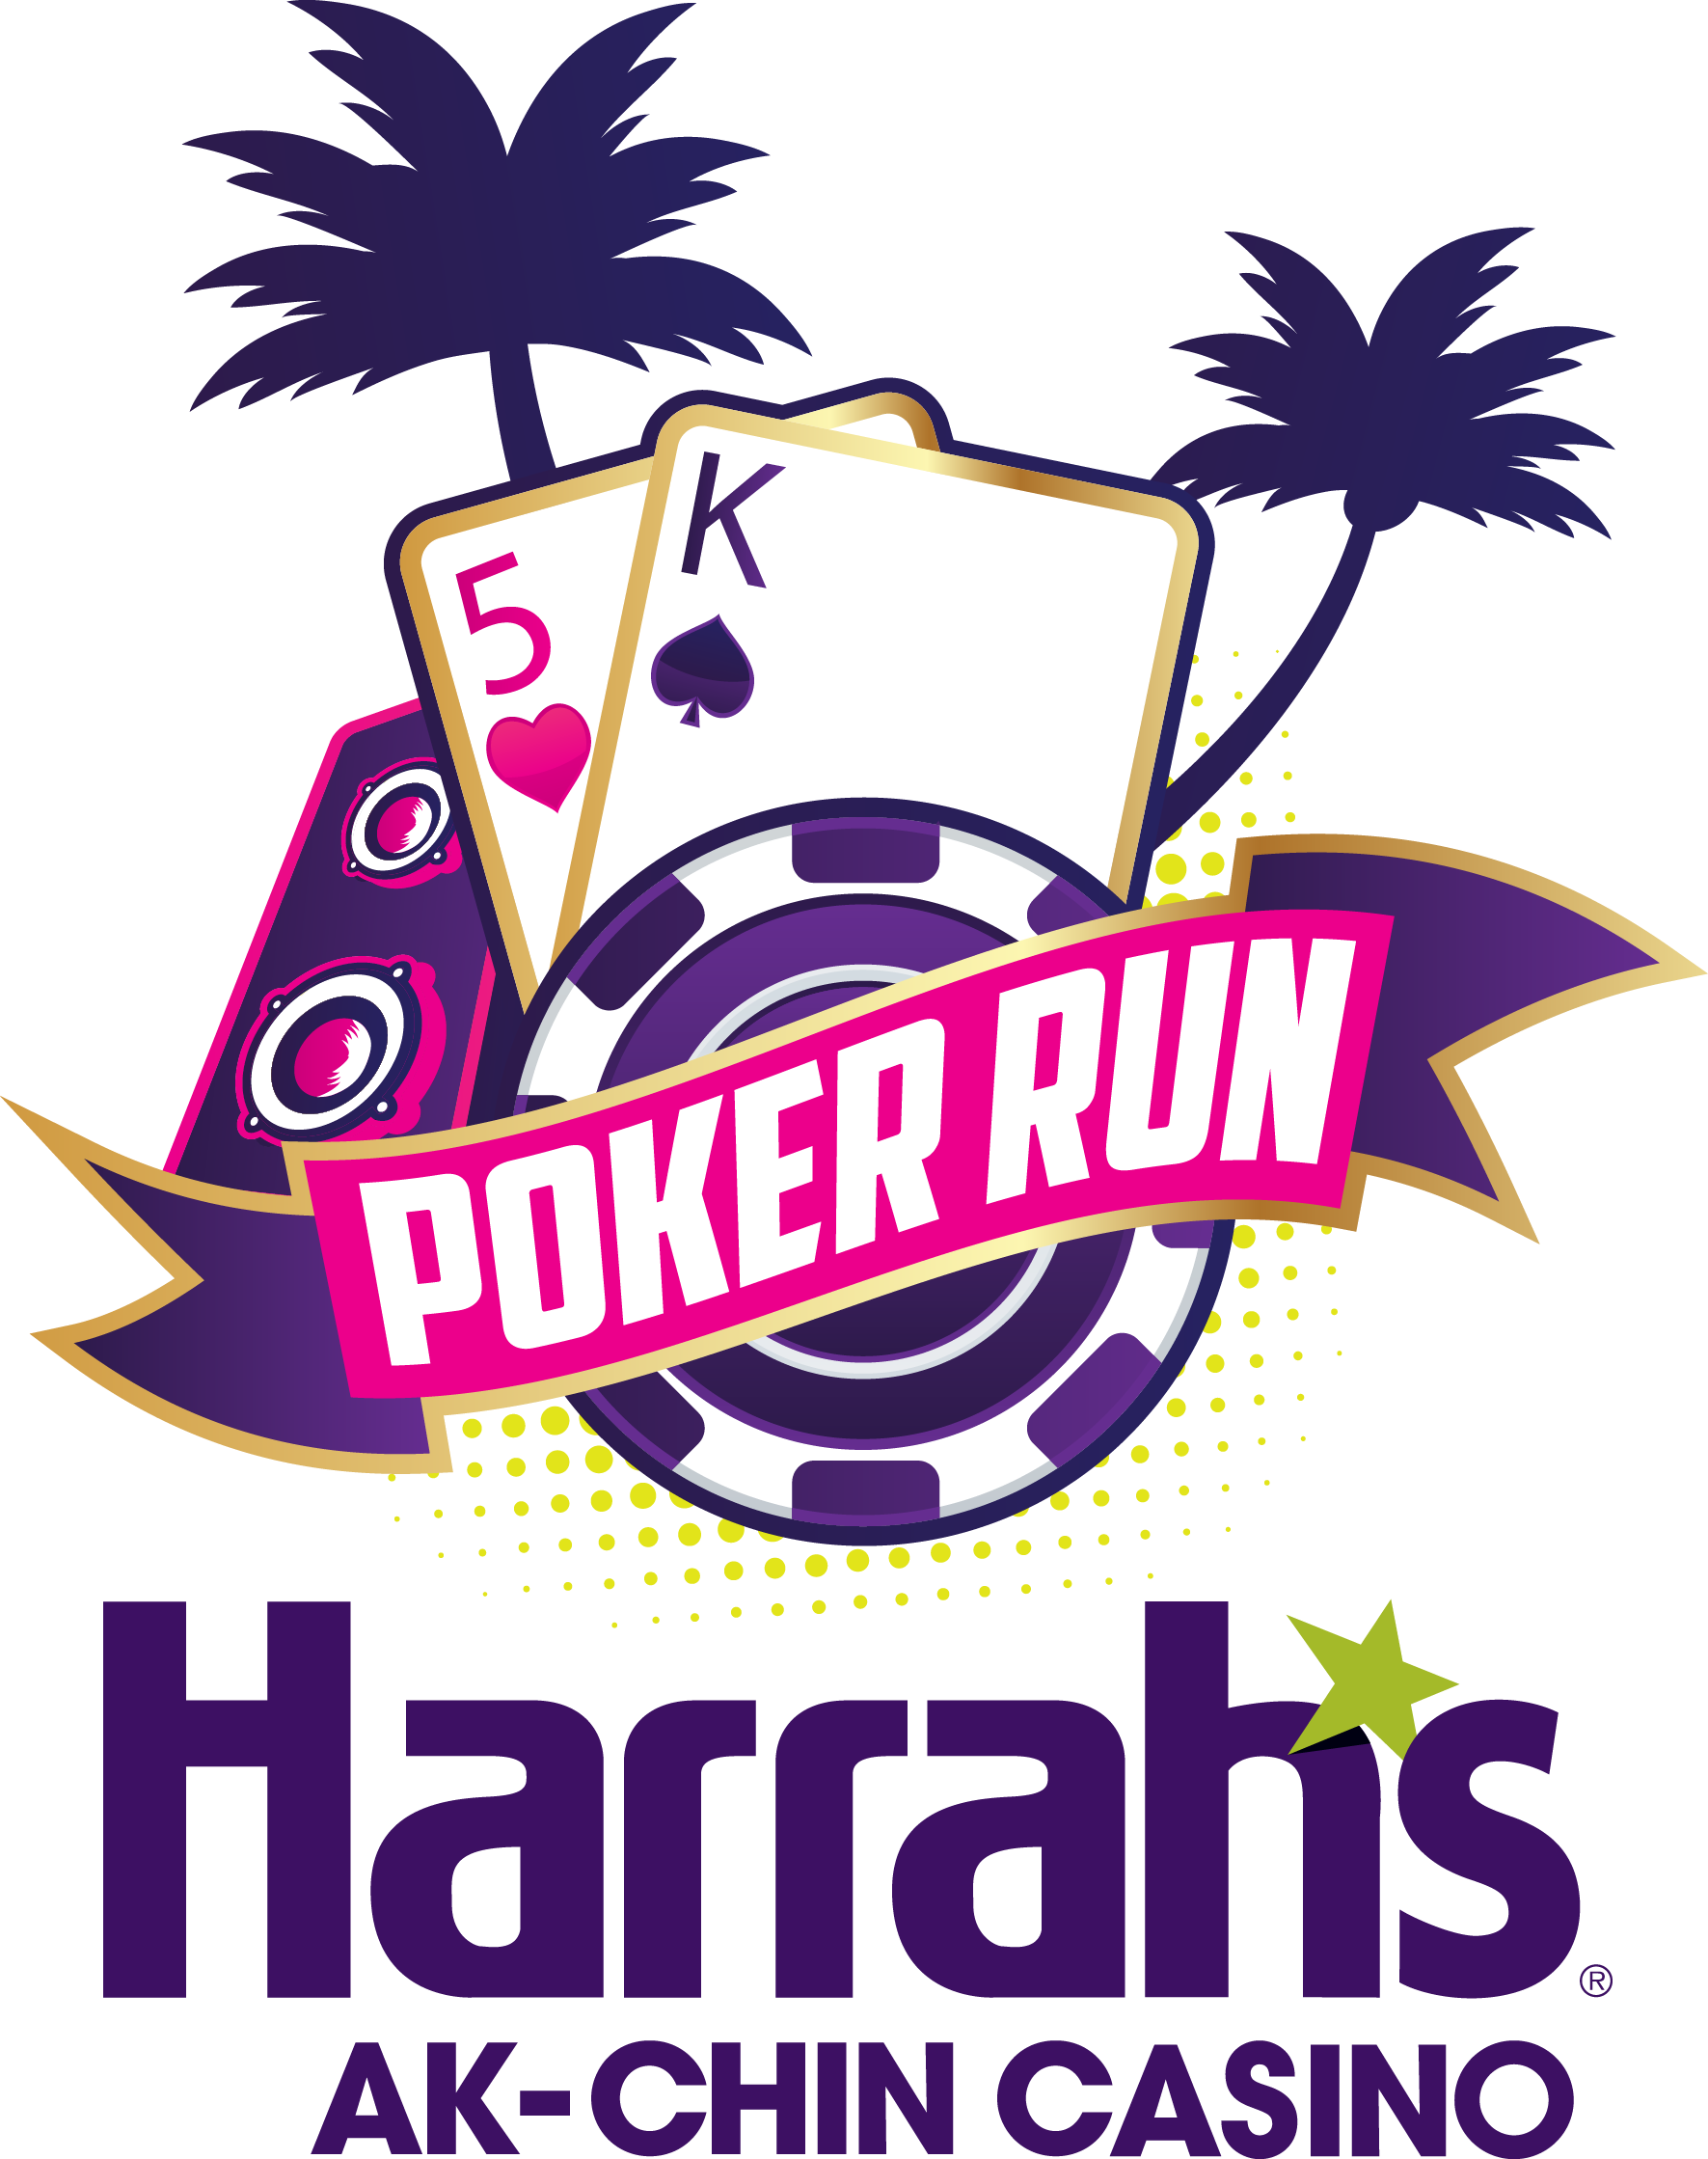 Harrah's Ak-chin Casino 5k Poker Run - Graphic Design (1771x2238)